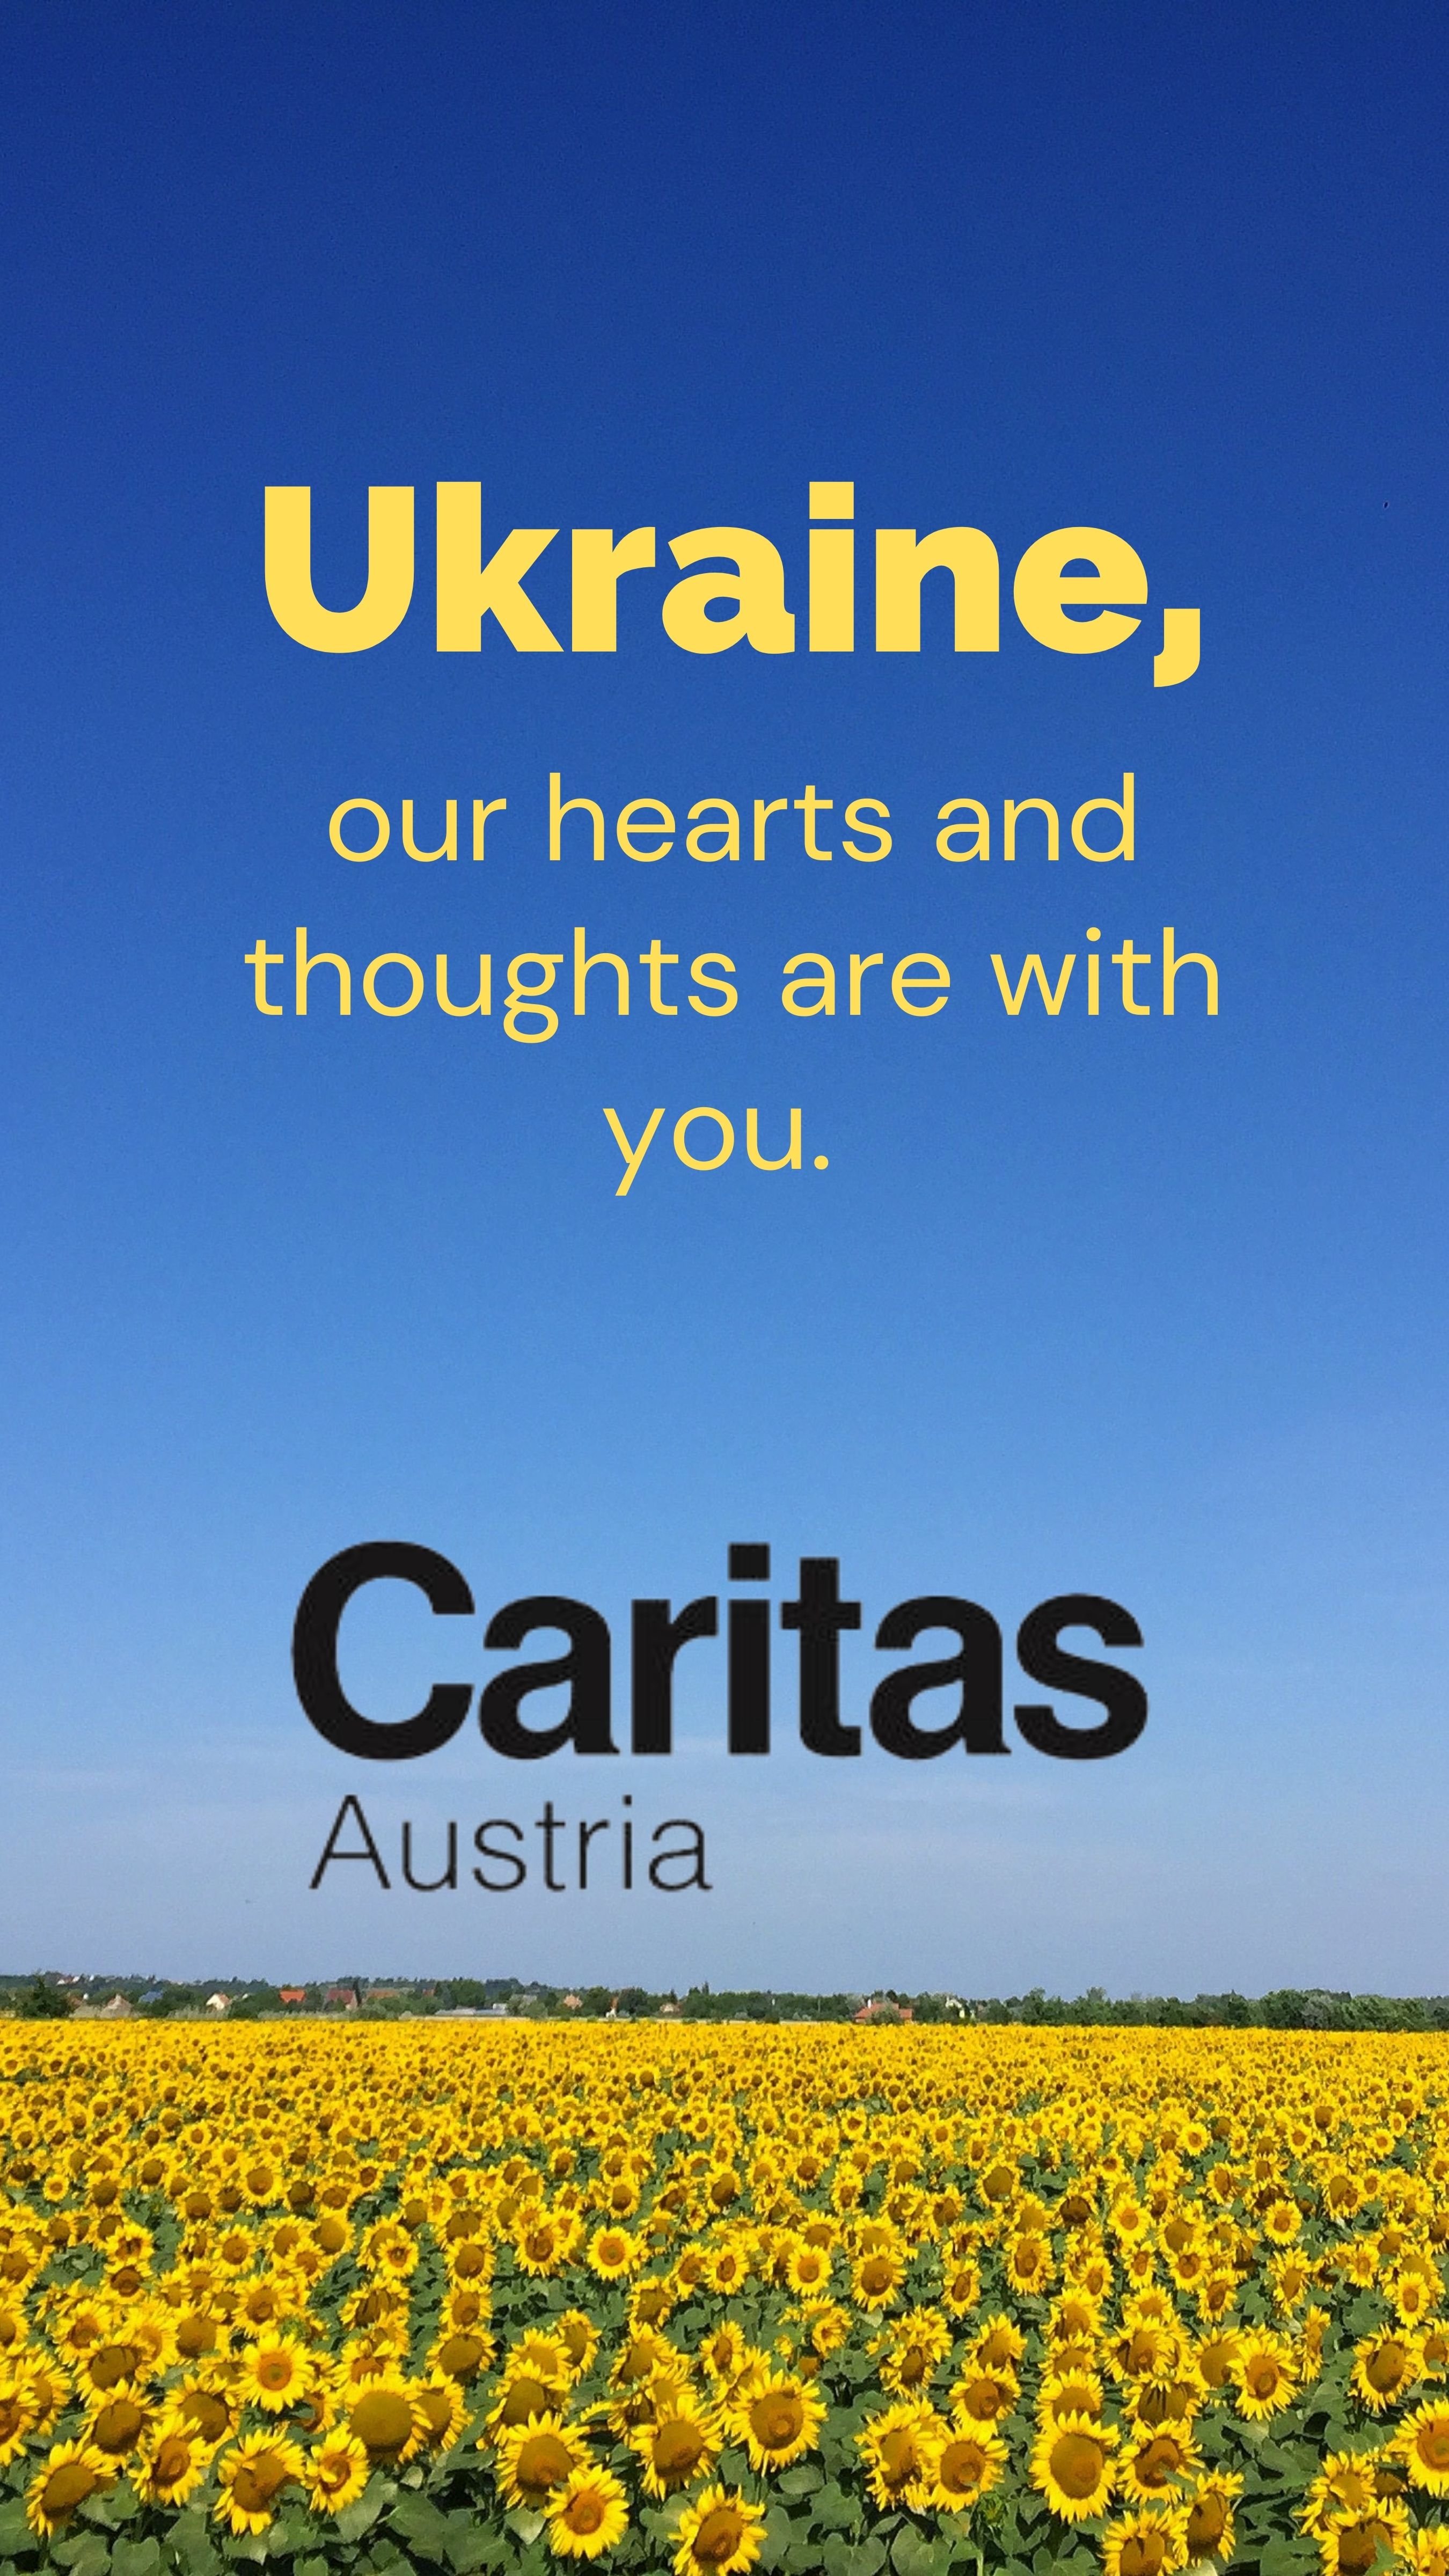 Huge gratitude for Caritas Austria